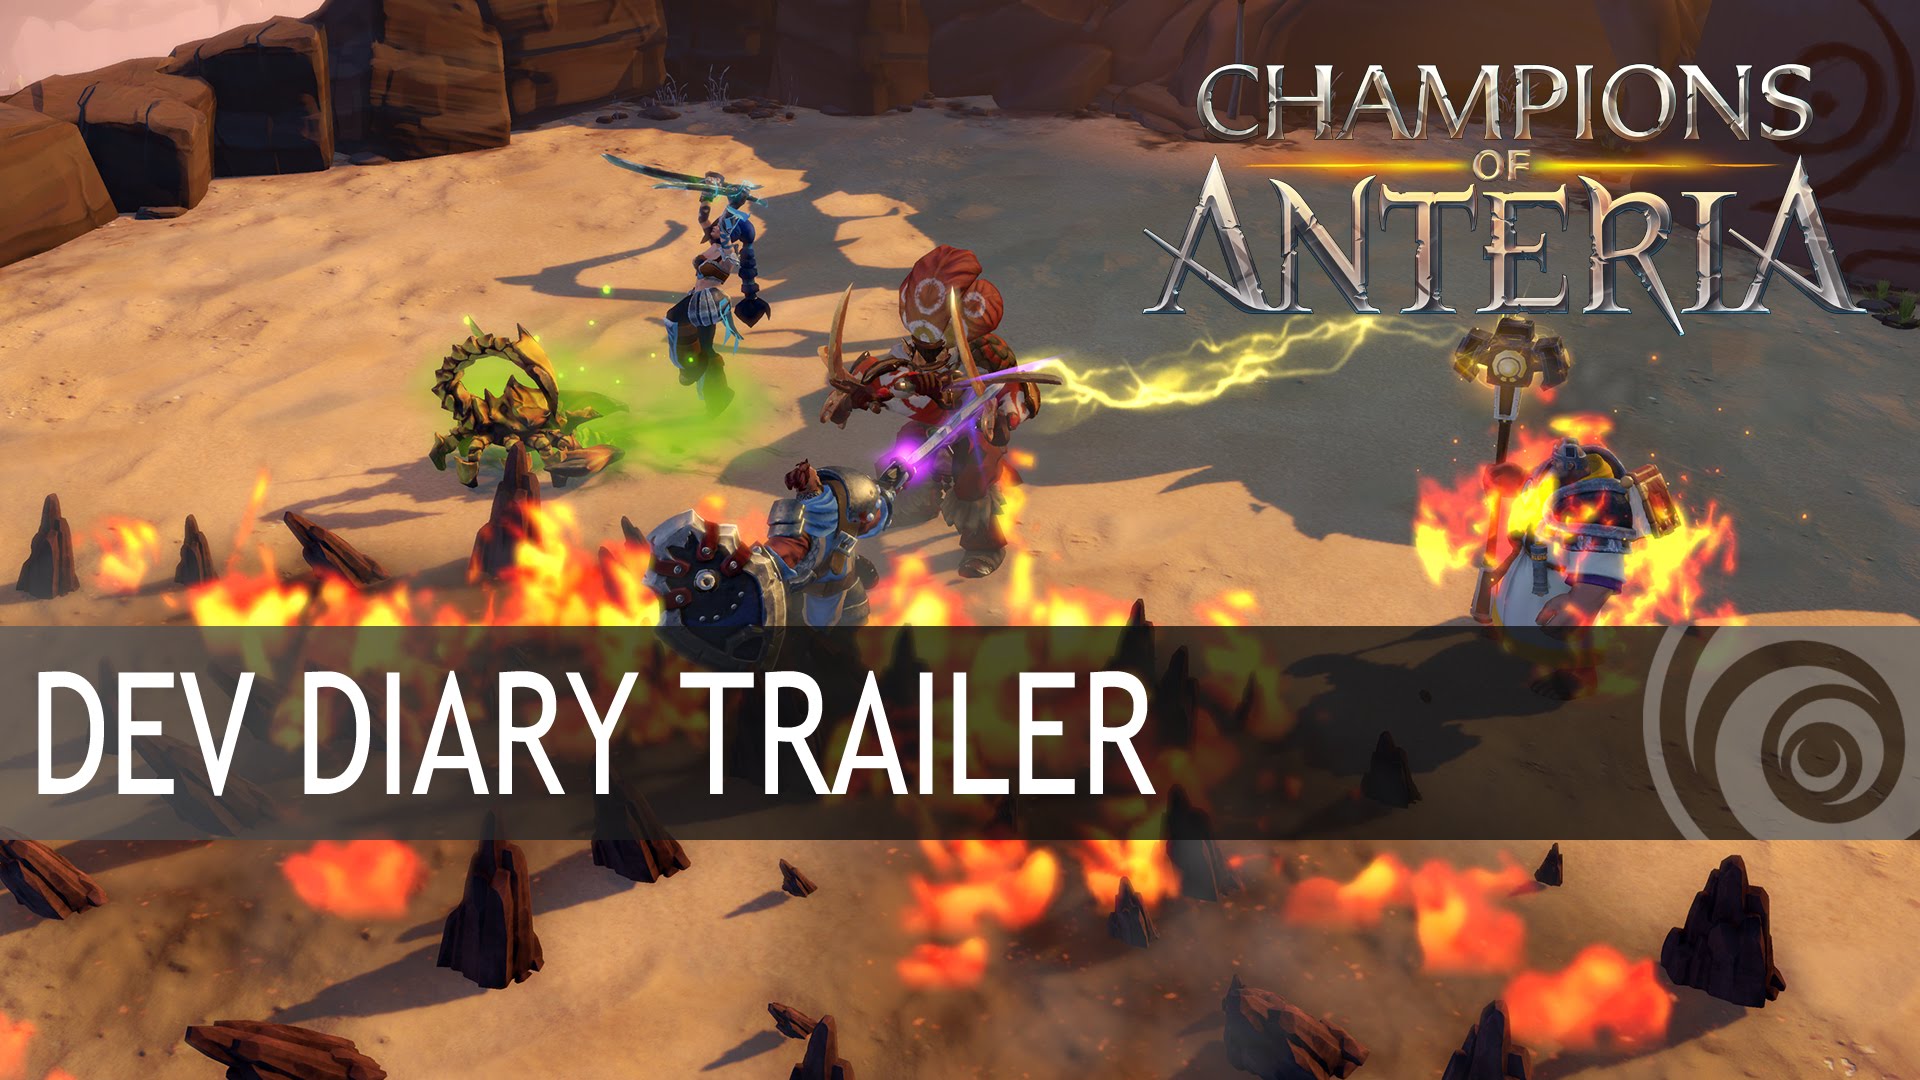 Champions of Anteria: Dev Diary Trailer.